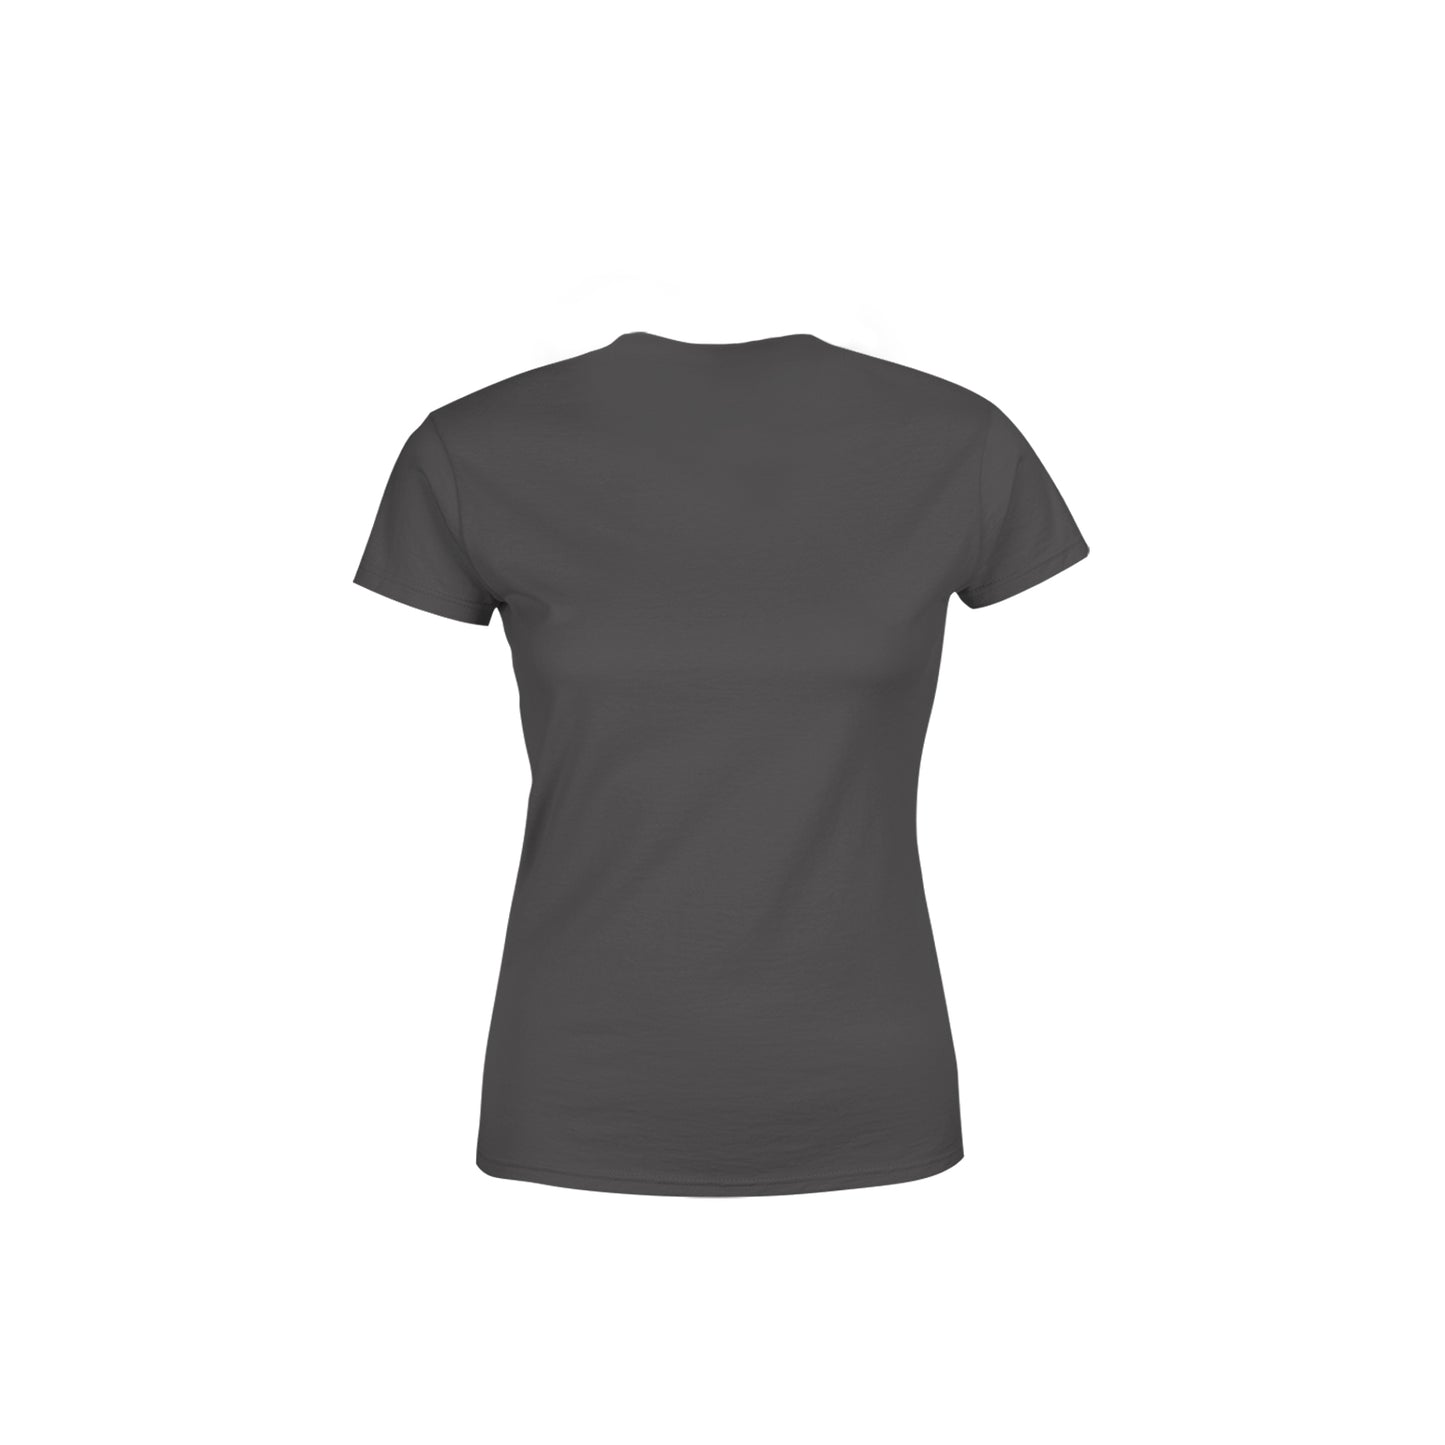 36 Number Women's T-Shirt (Charcoal Grey)